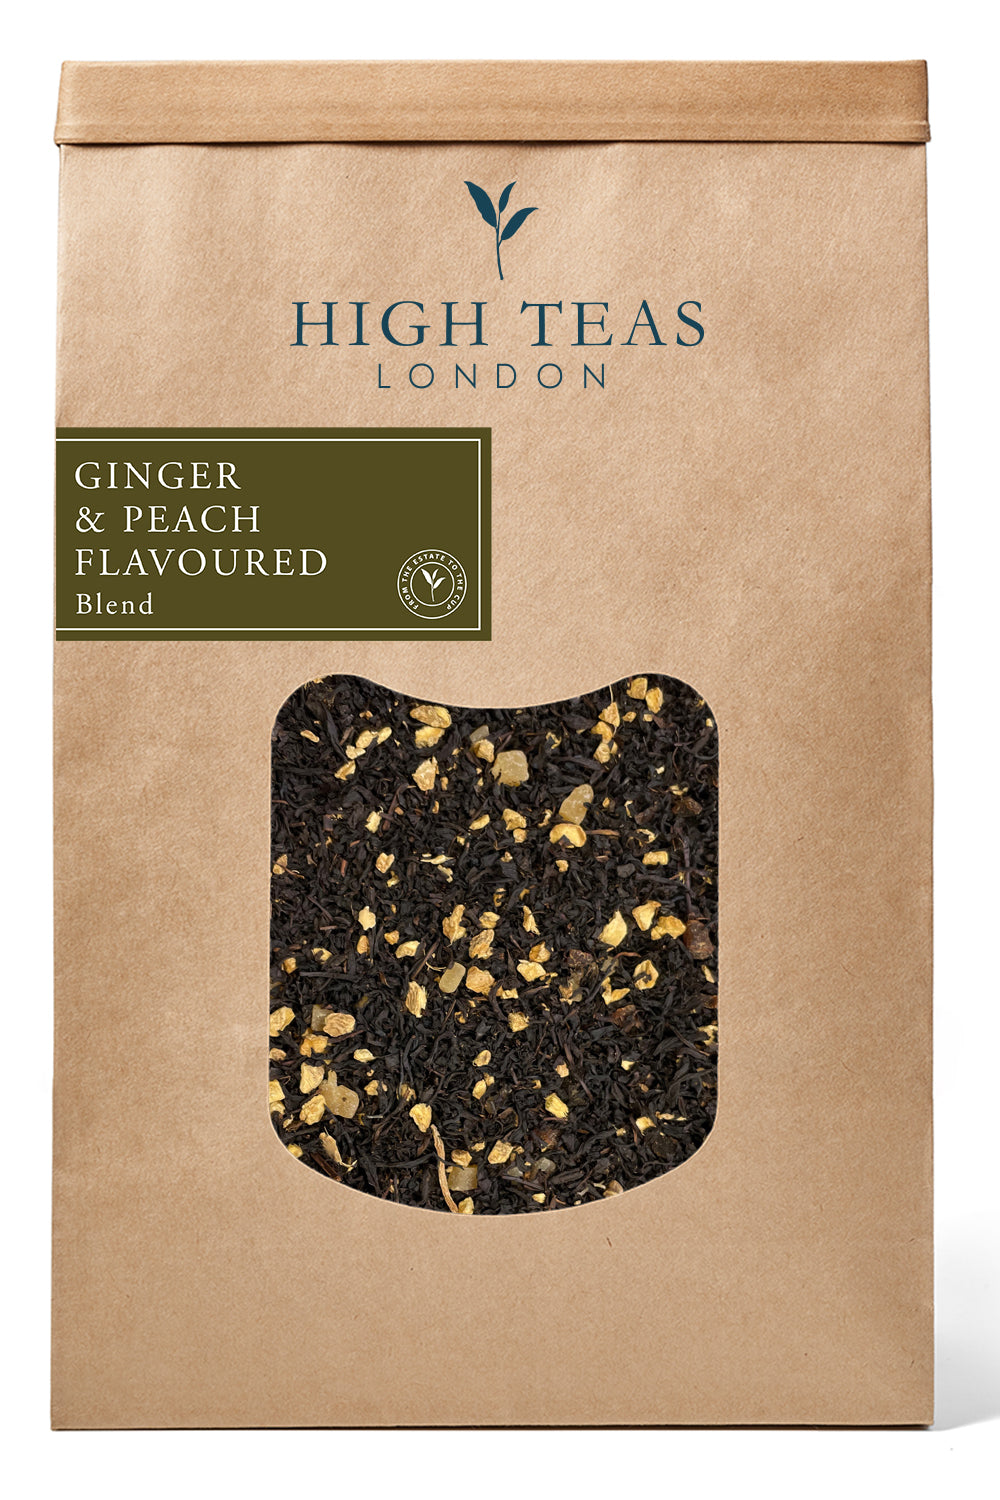 Ginger & Peach flavoured black tea-500g-Loose Leaf Tea-High Teas